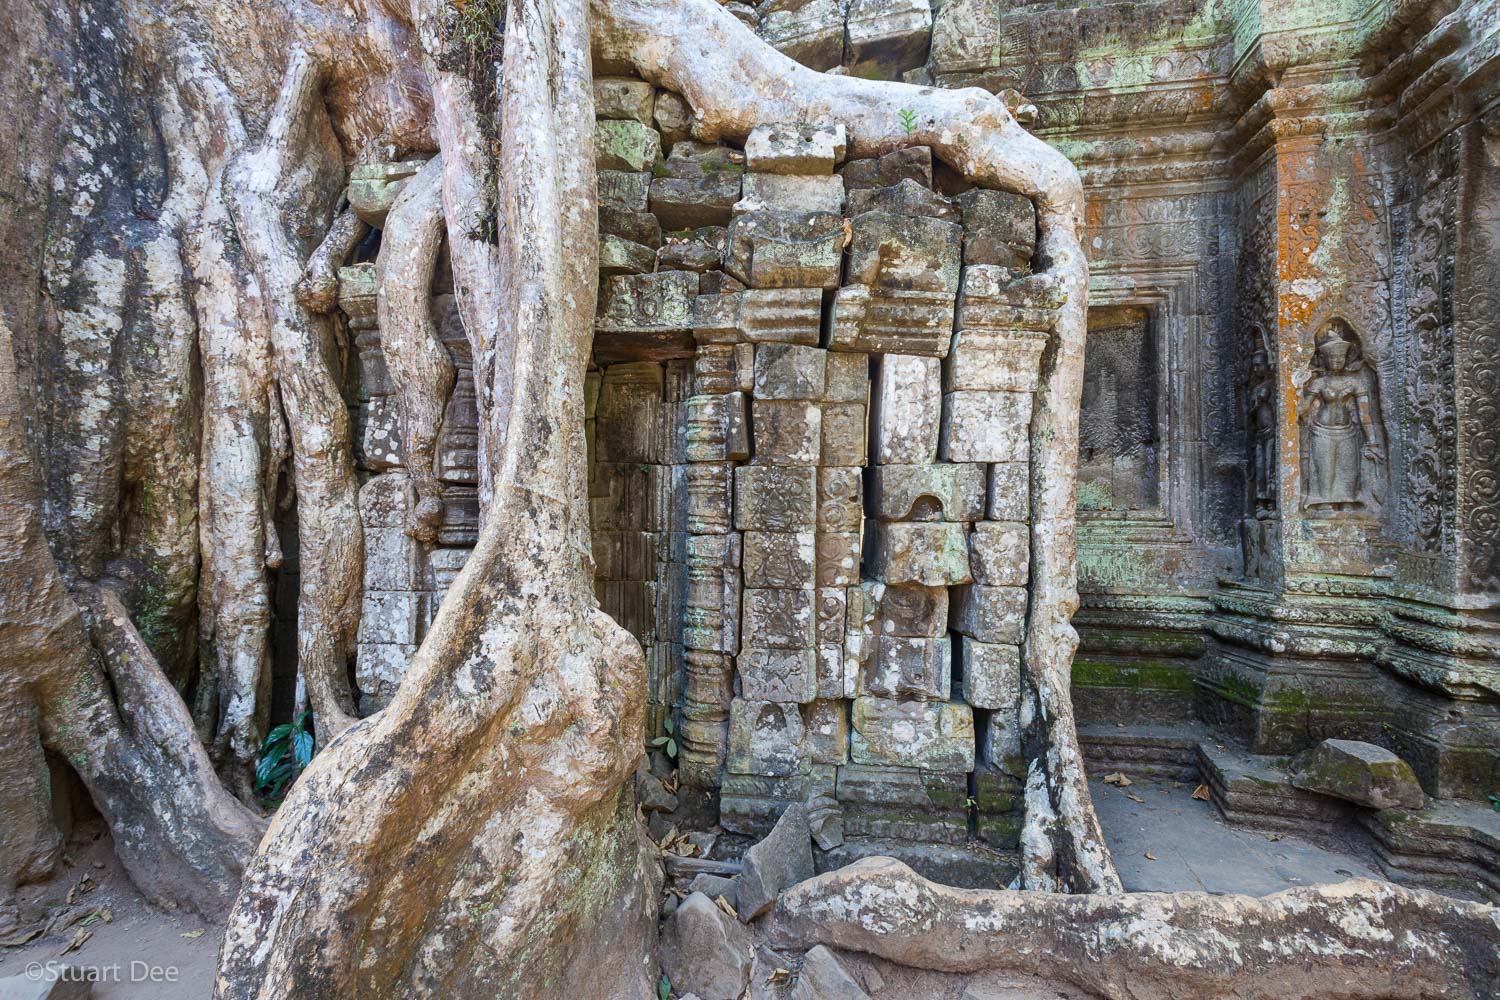  Angkor Wat Complex, Angkor, Siem Reap Province, Cambodia 